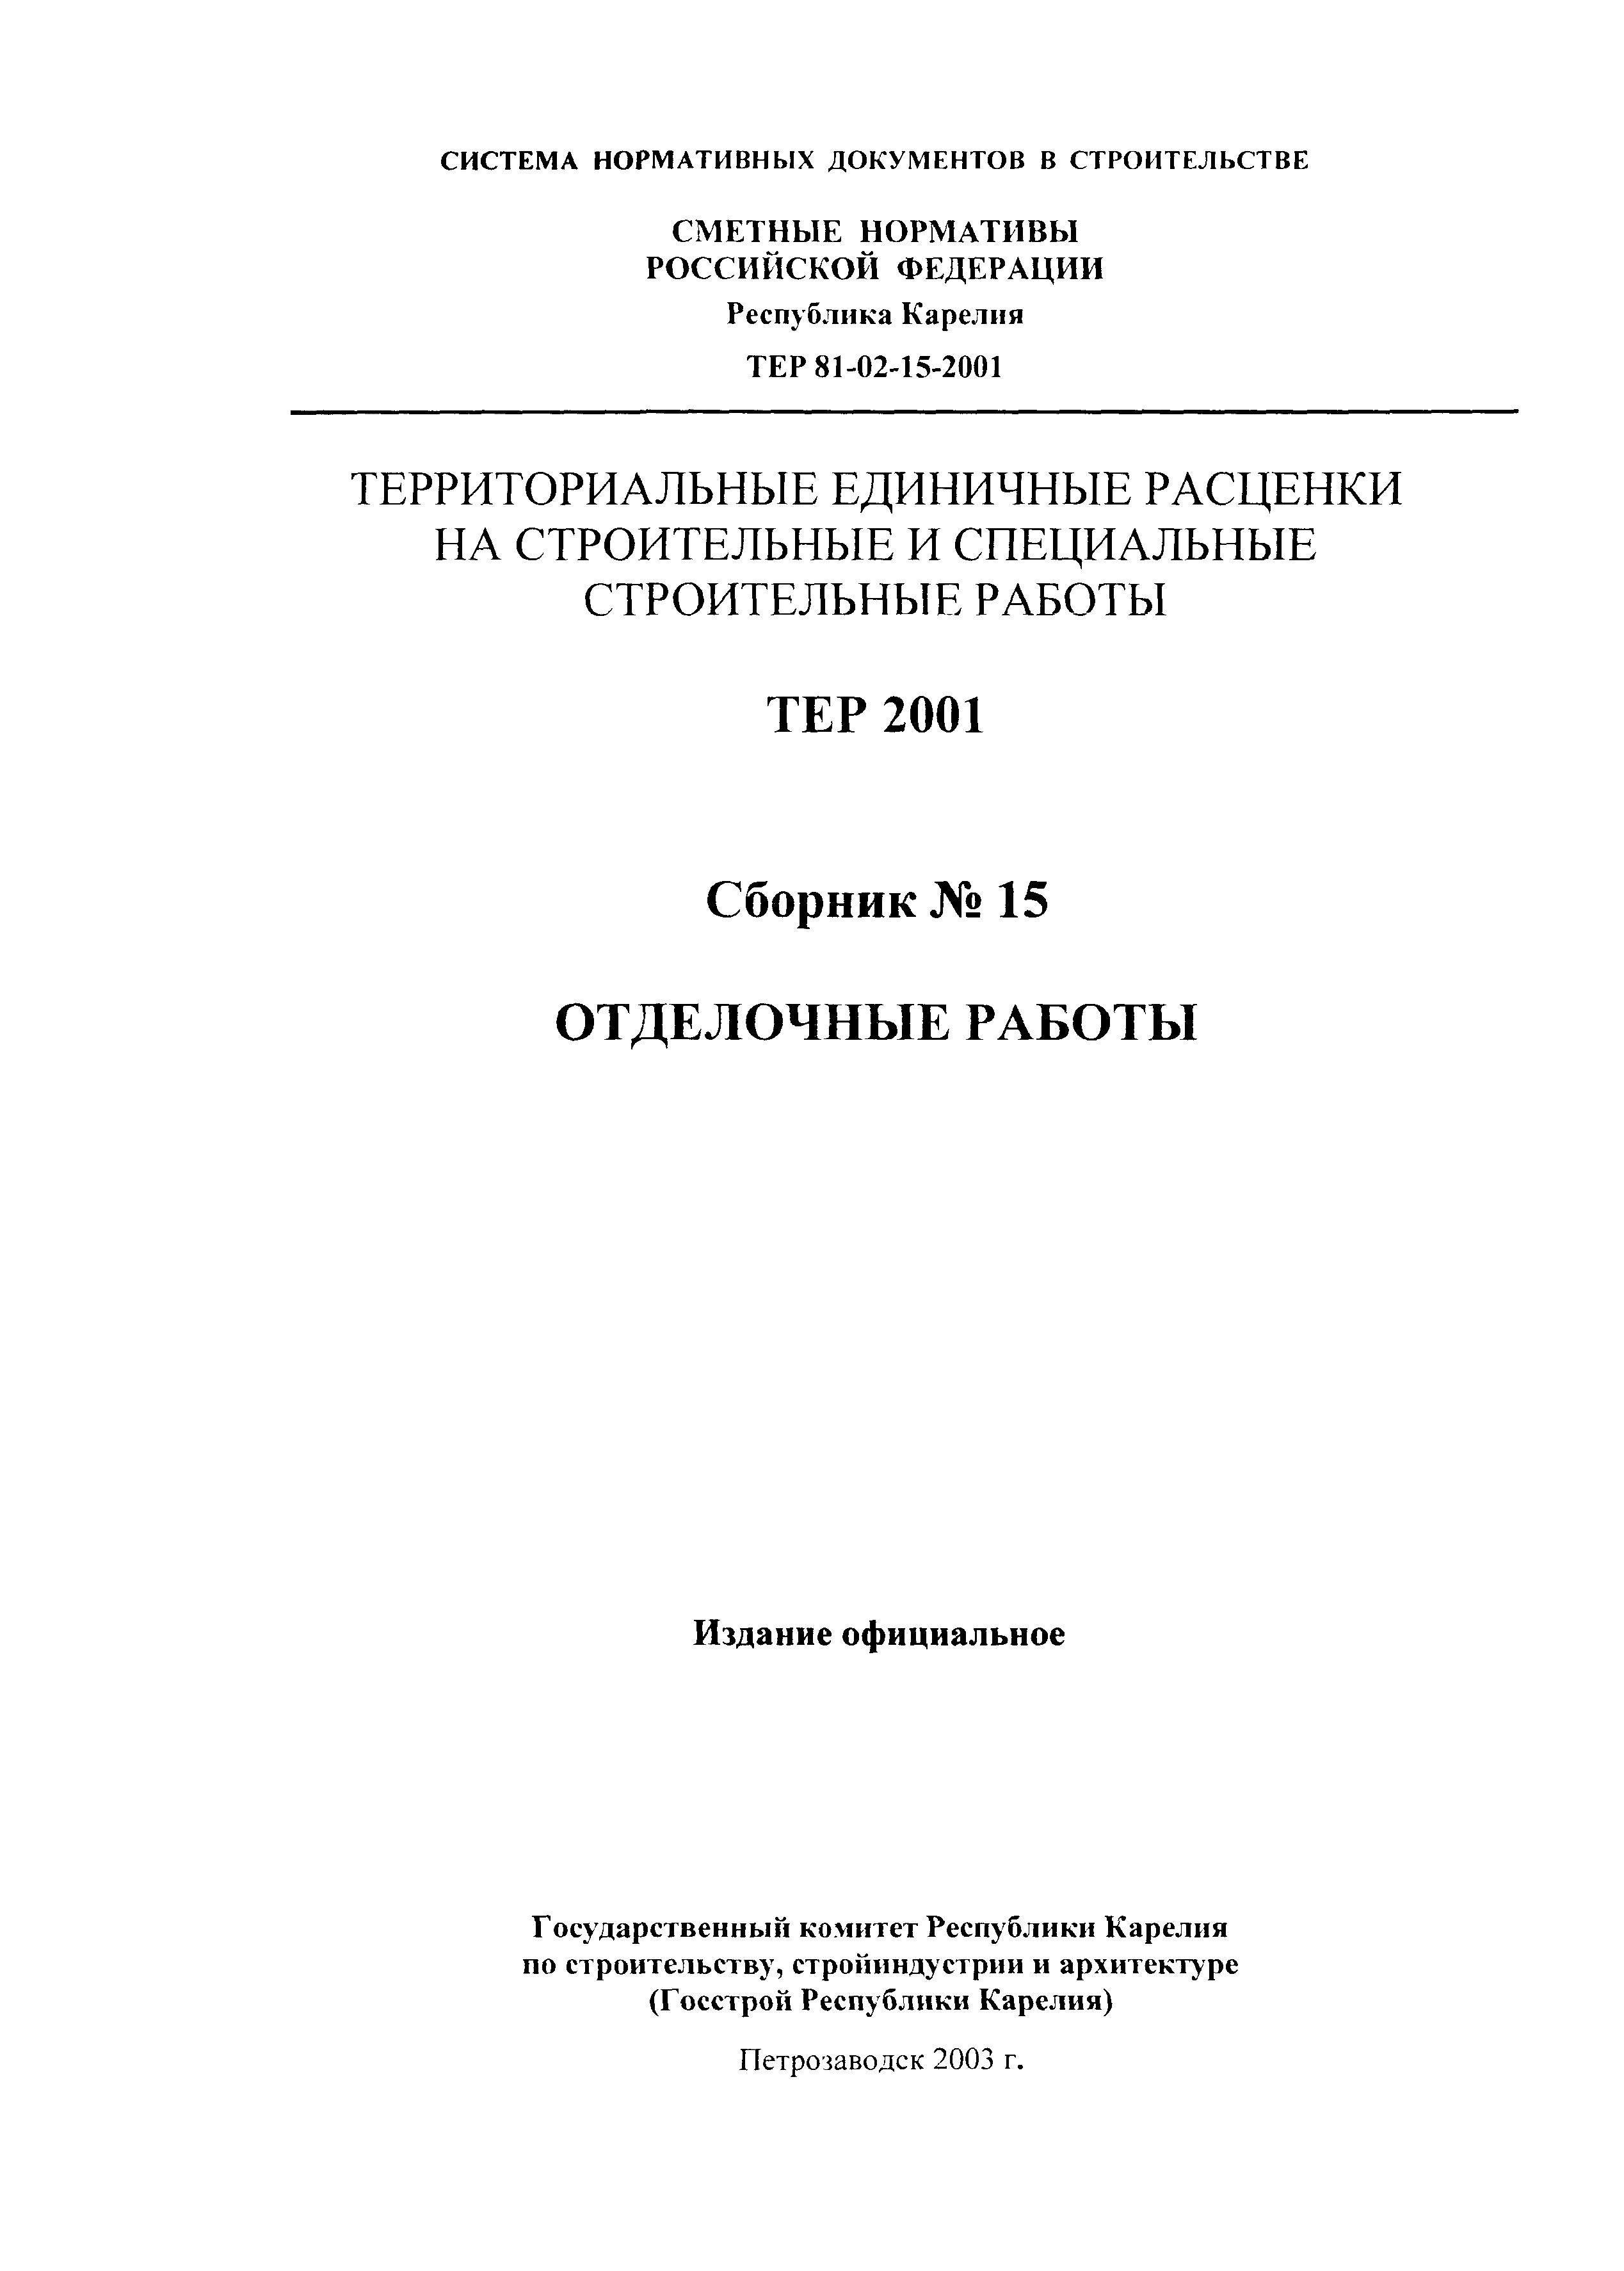 ТЕР Республика Карелия 2001-15